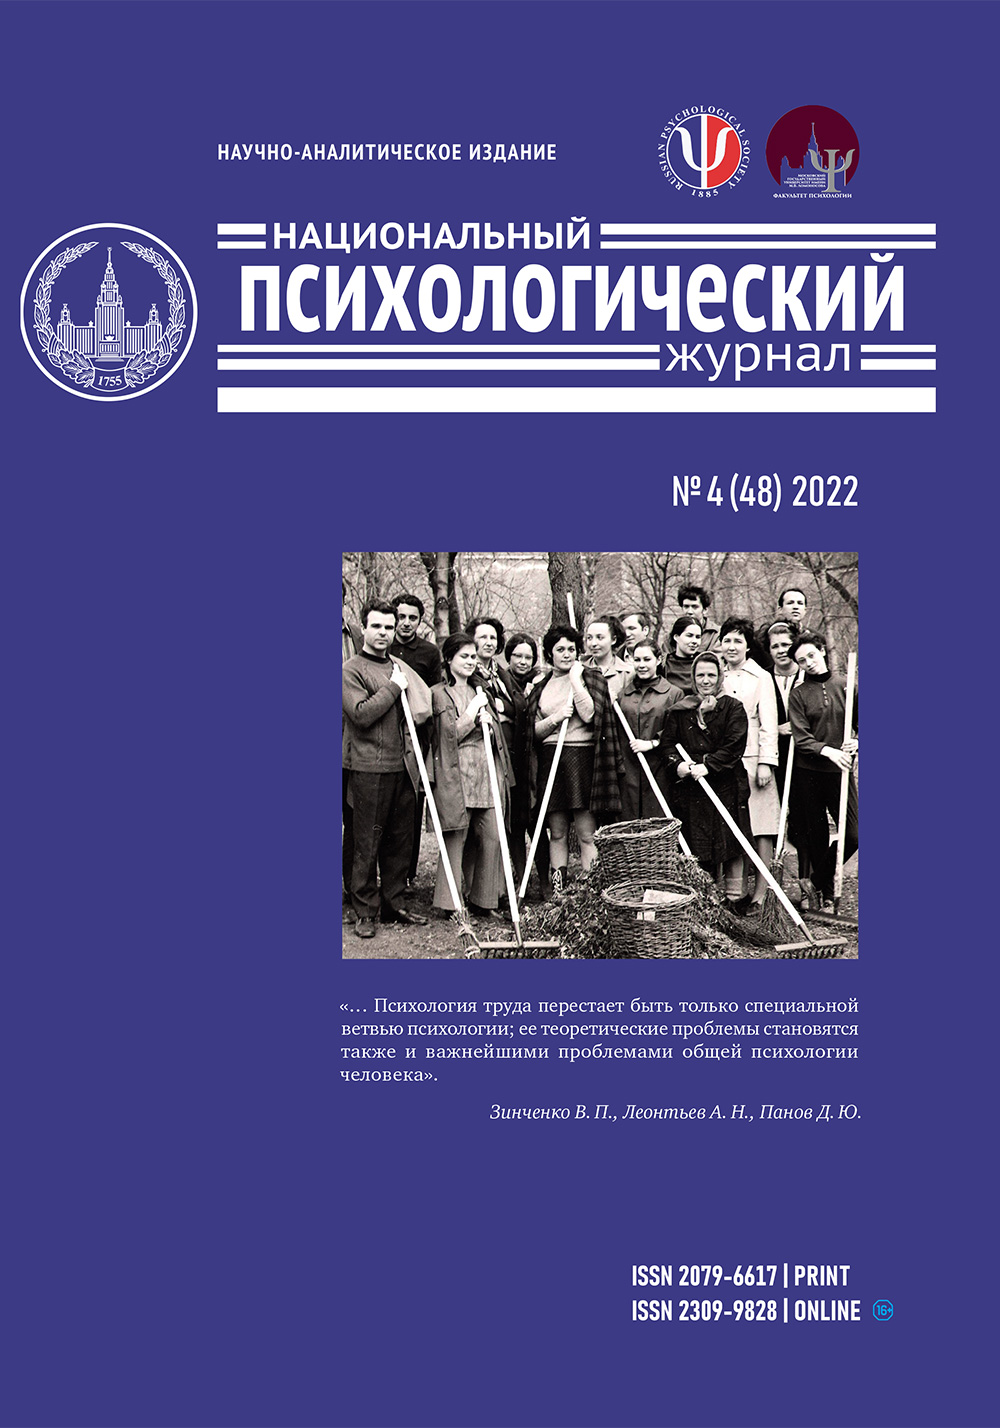 National Psychological Journal, Moscow: Lomonosov Moscow State University, 2022, 4, 143 p.